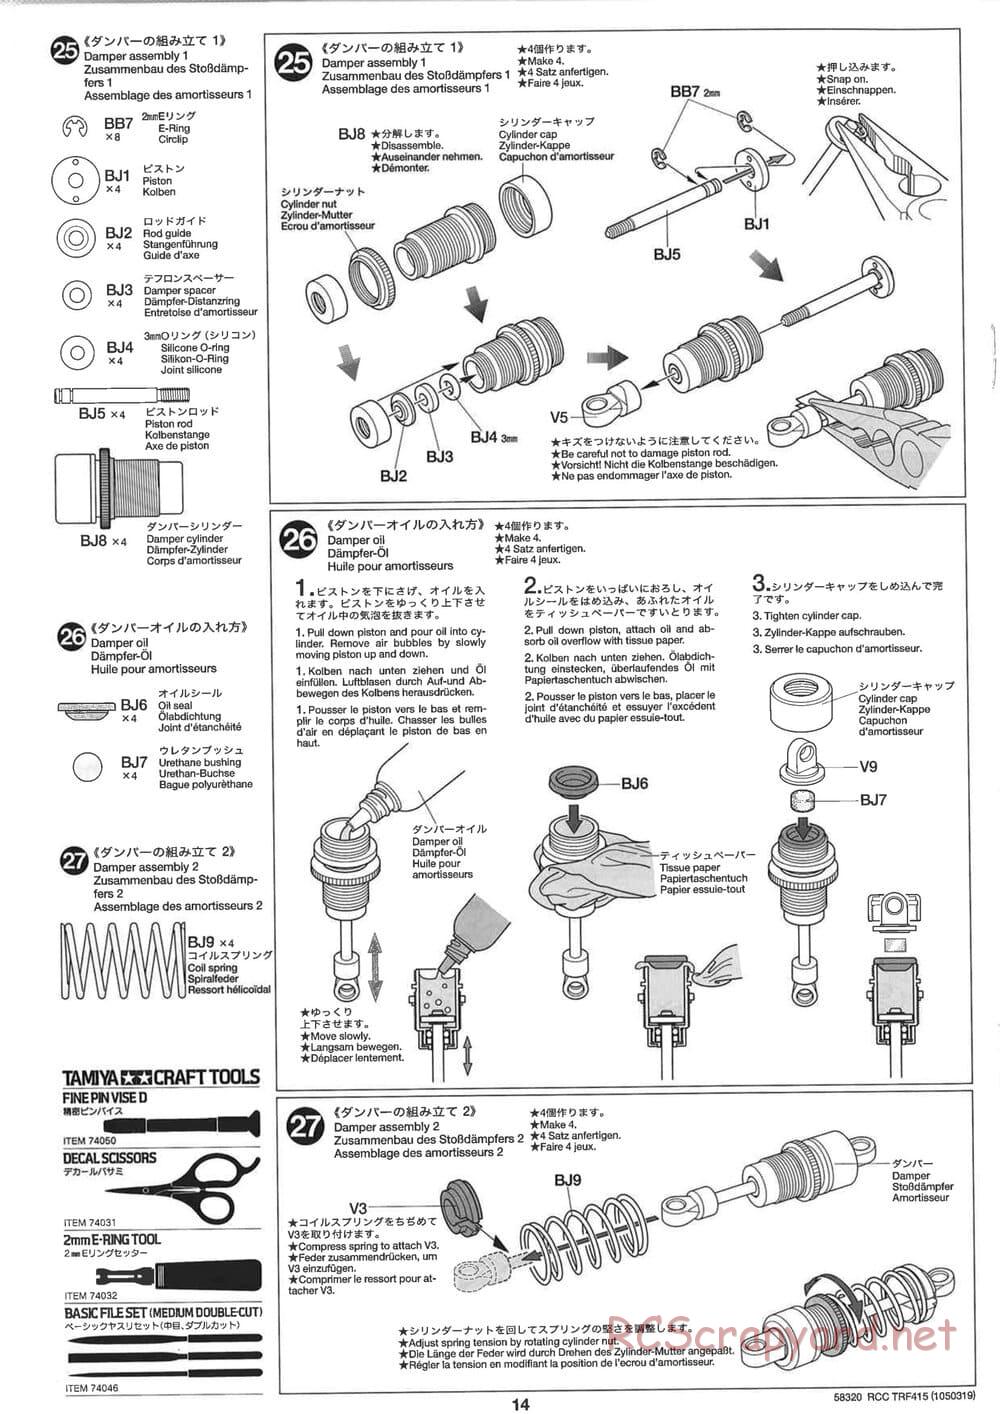 Tamiya - TRF415 Chassis - Manual - Page 14